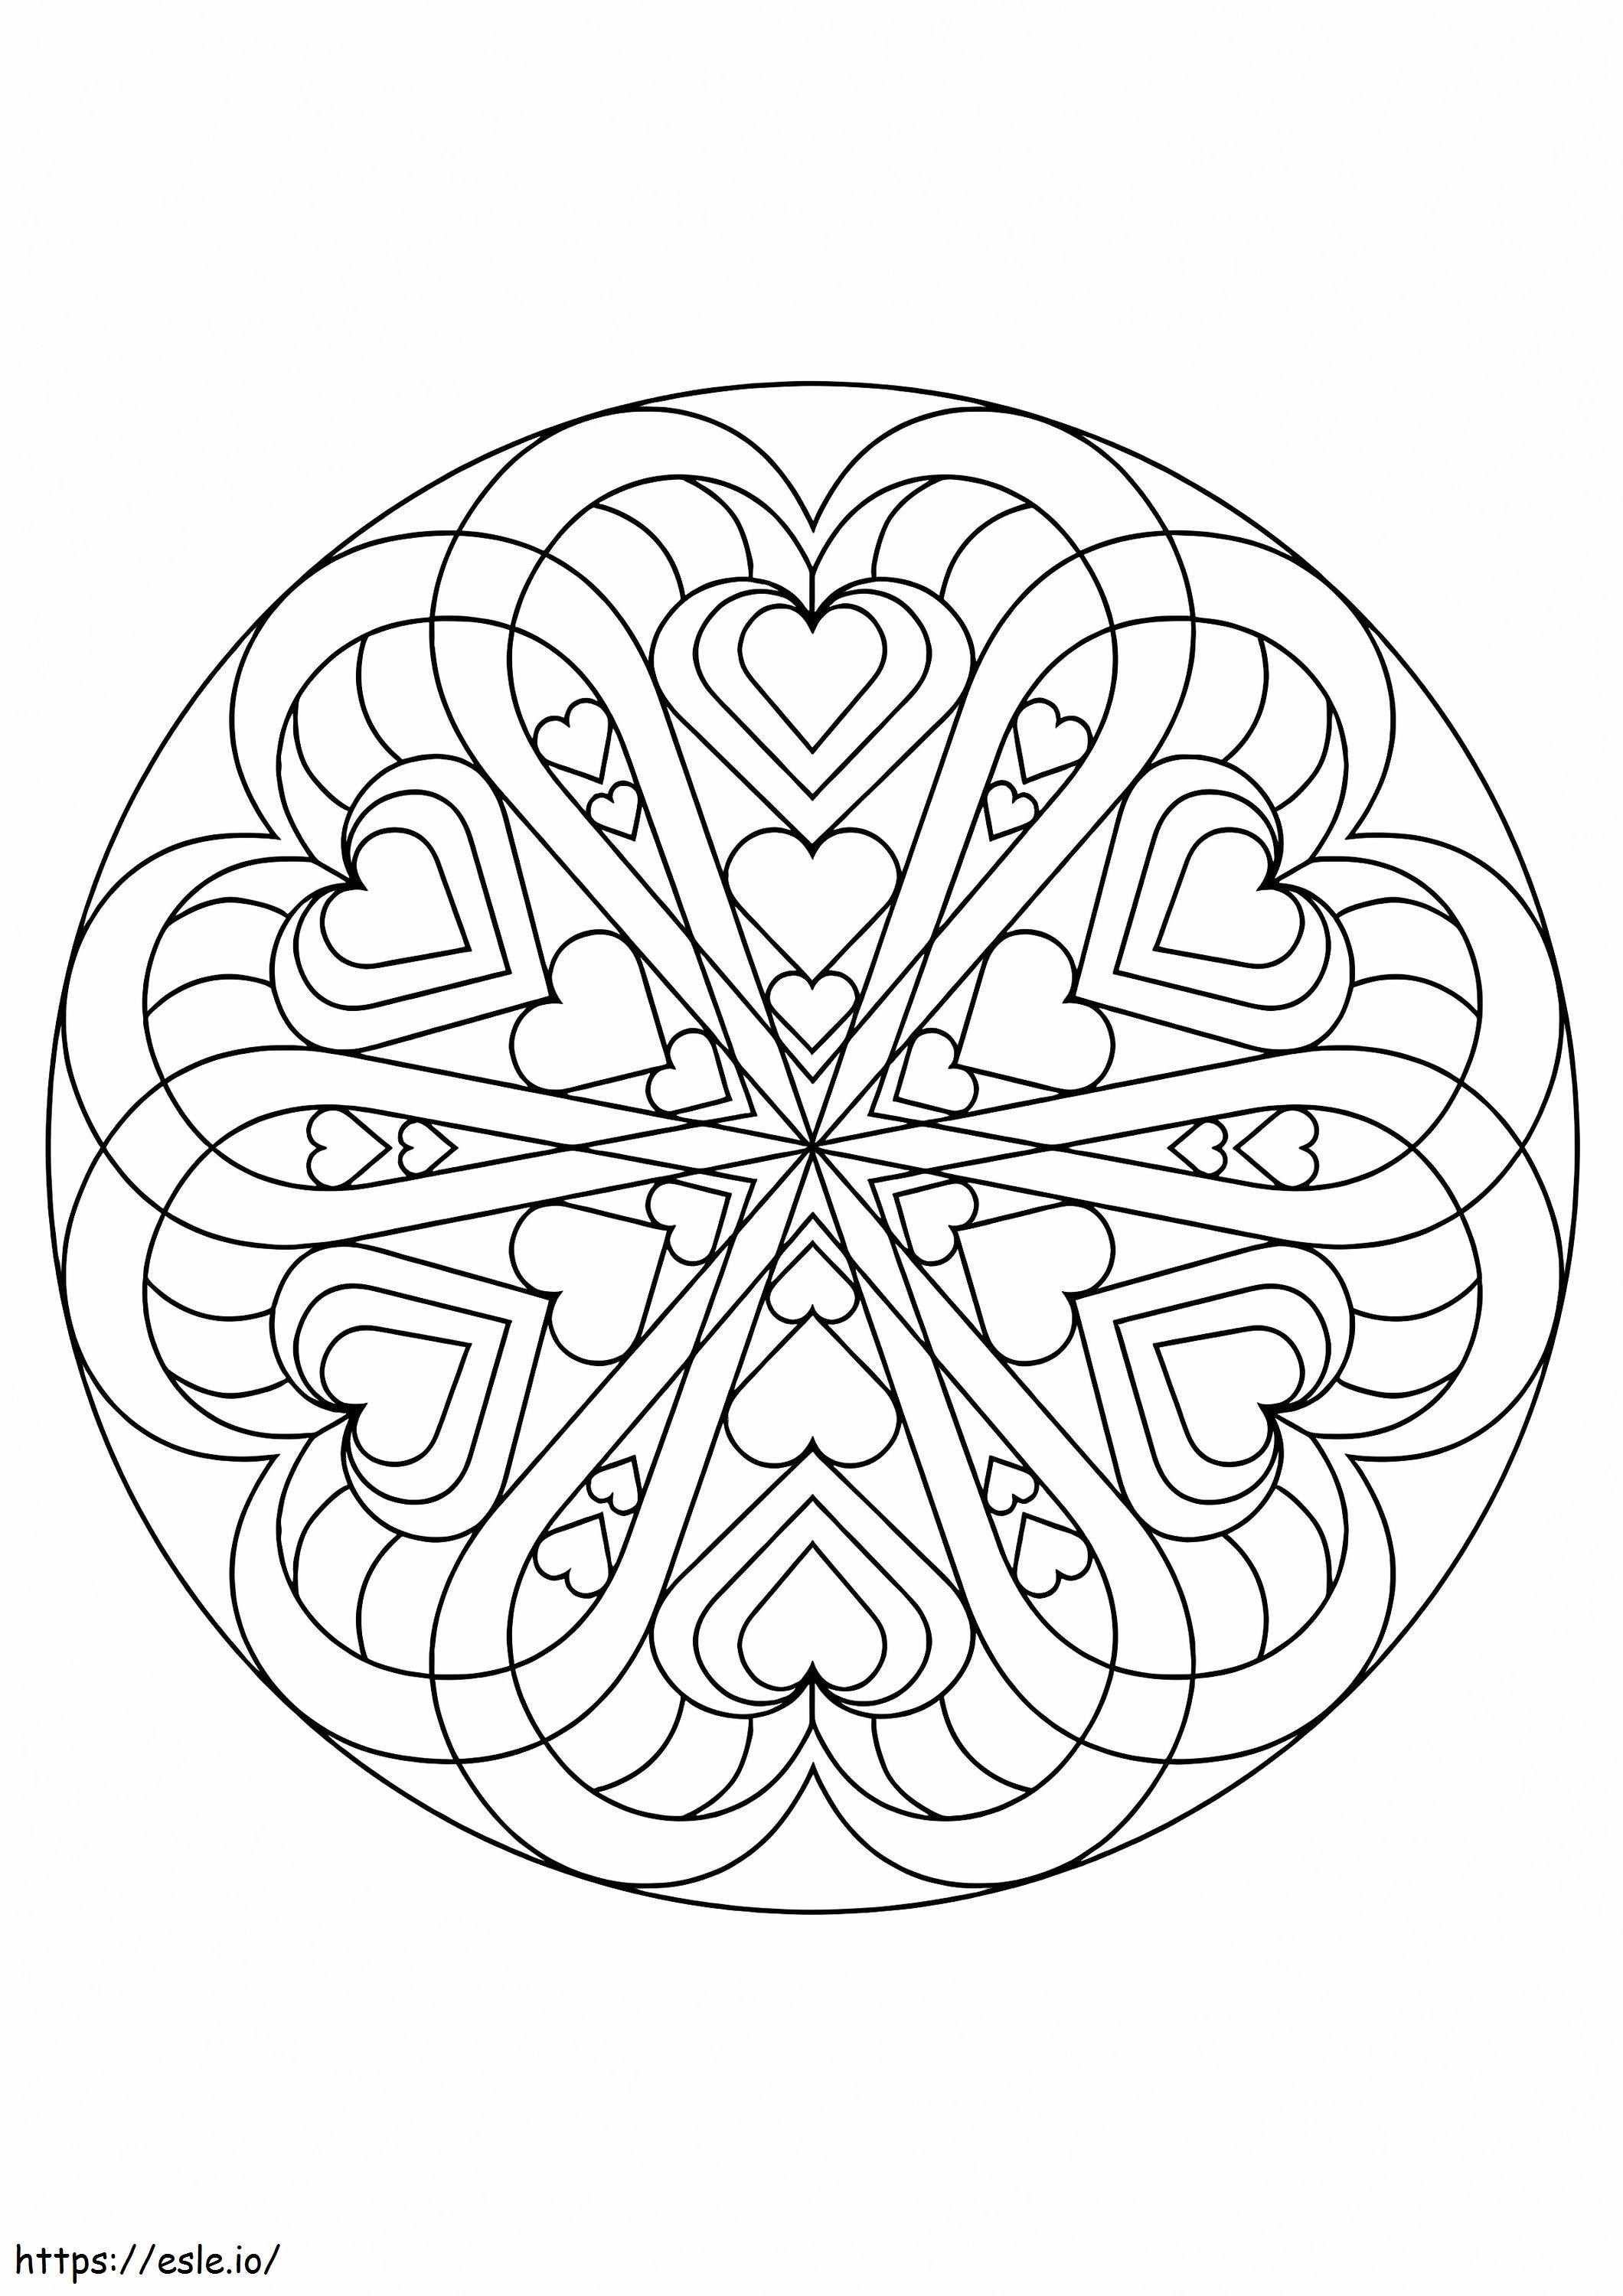 The Heart Mandala A4 coloring page